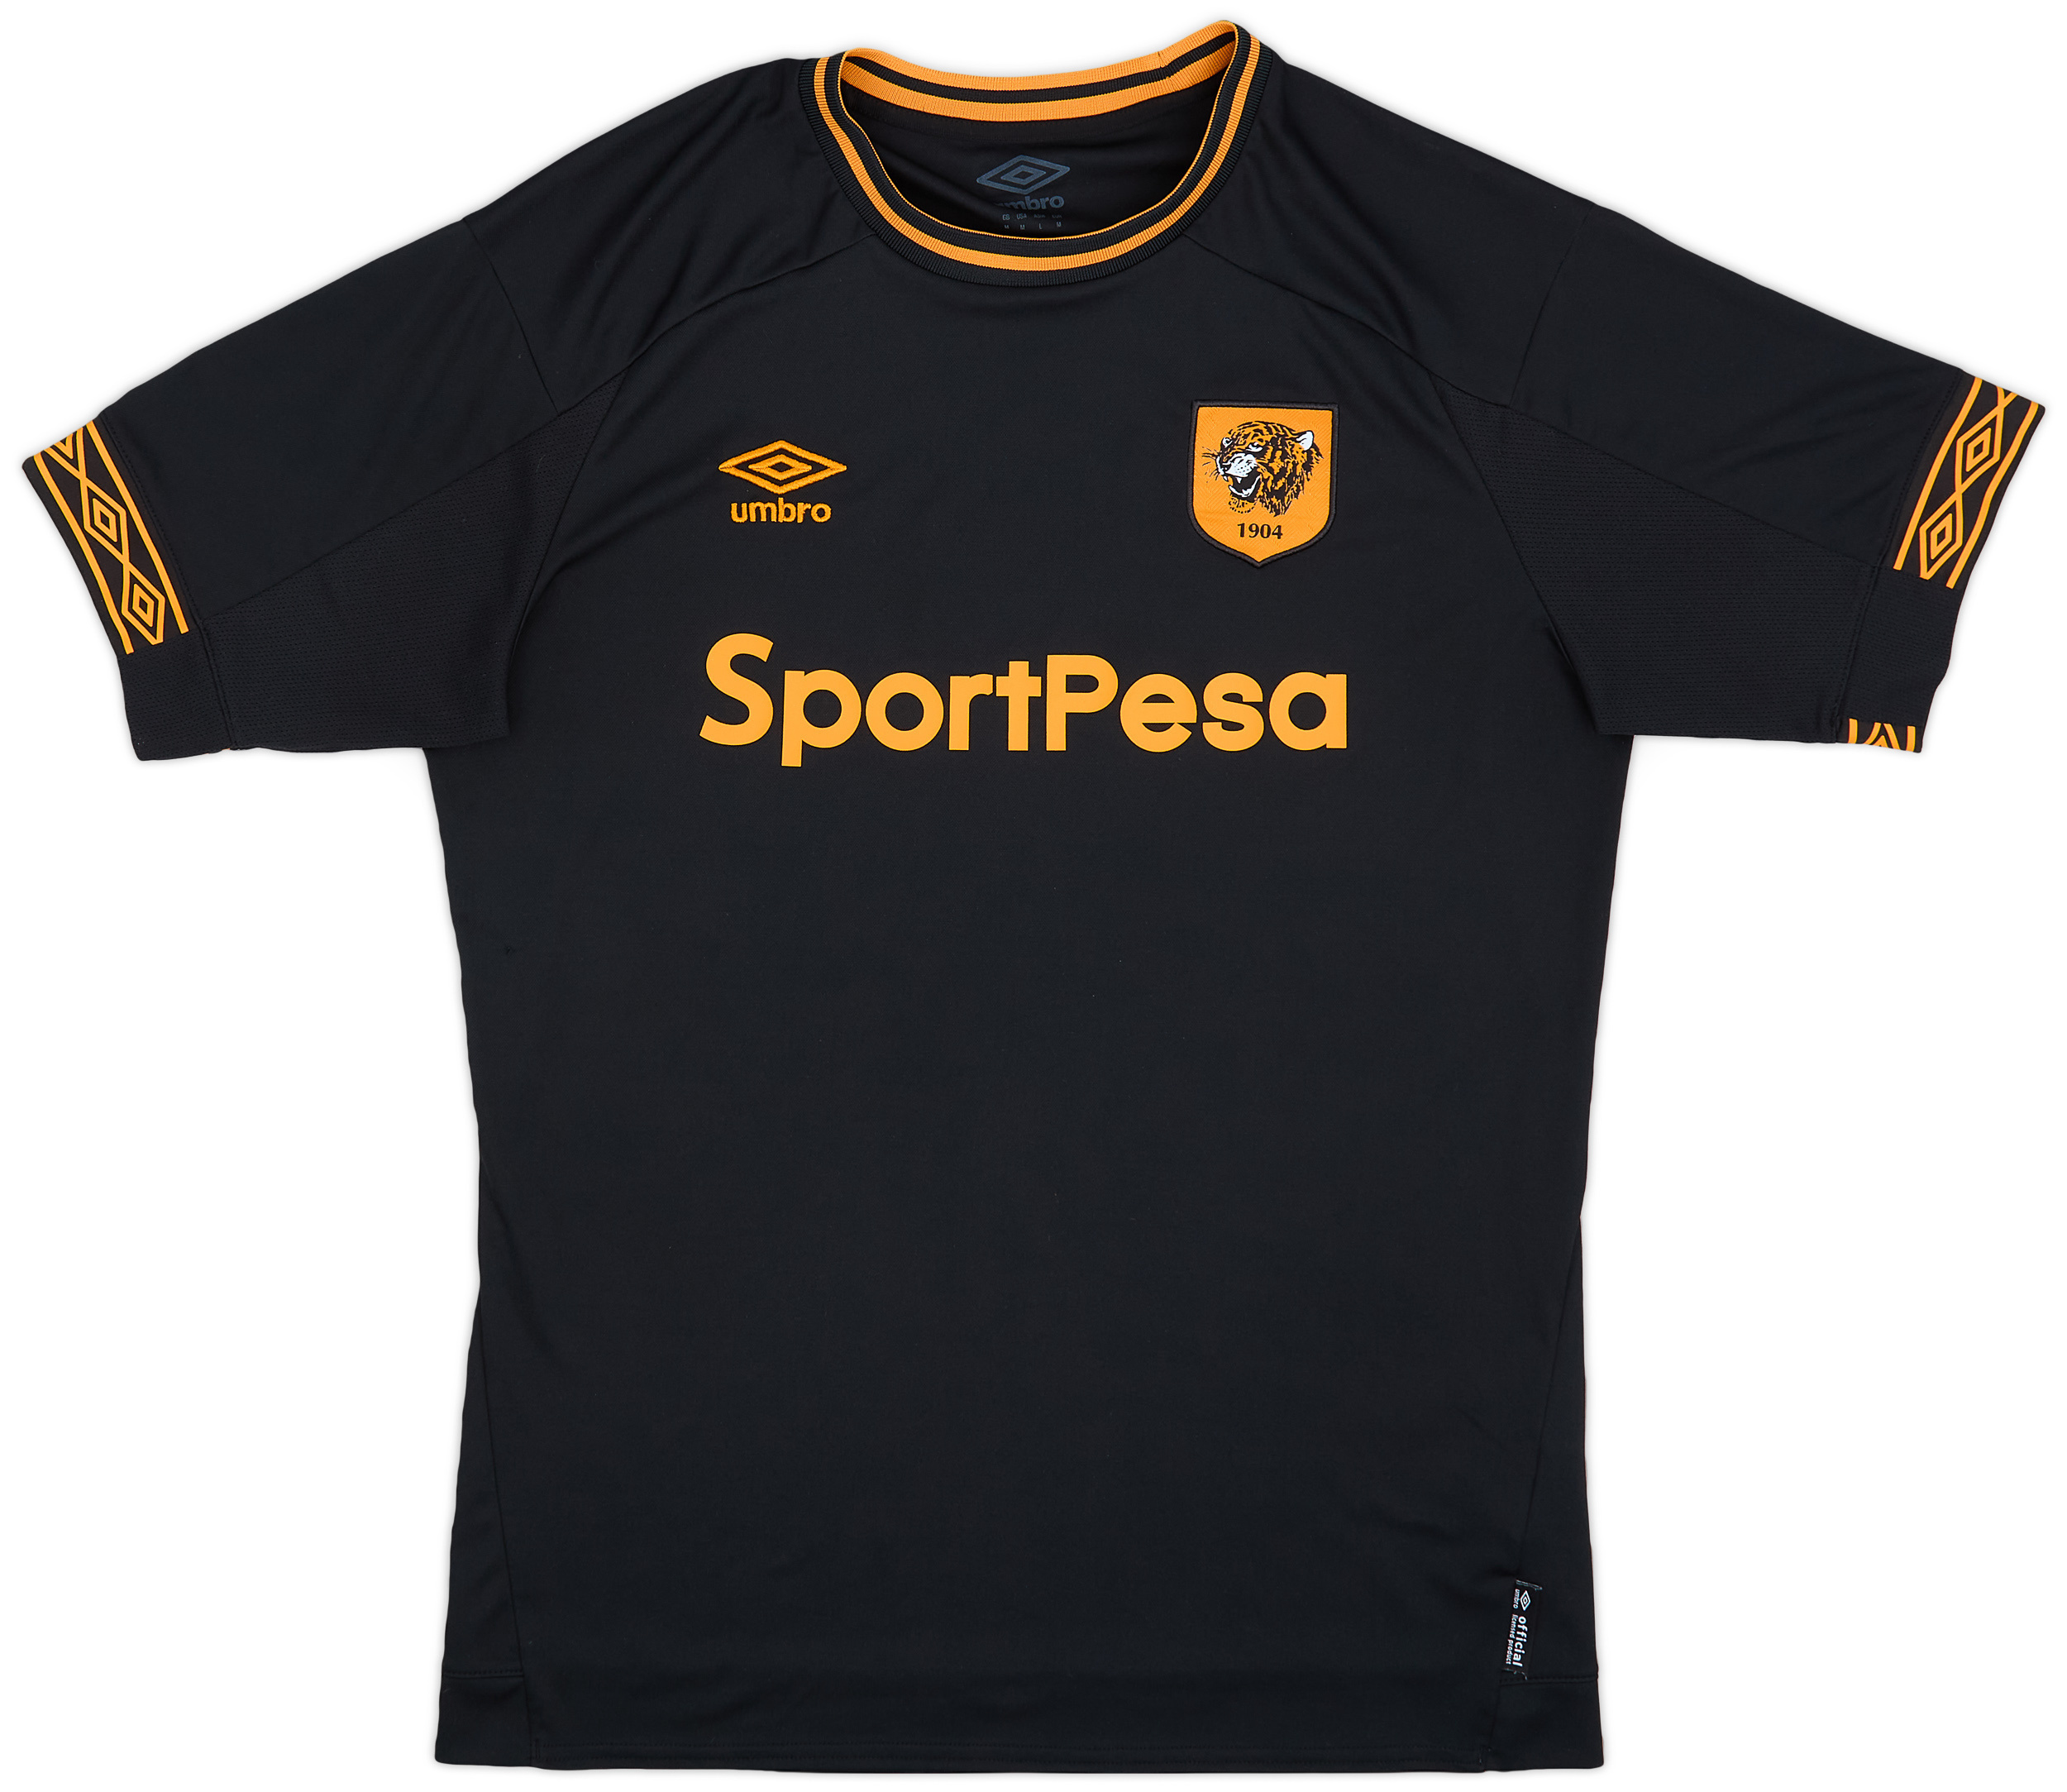 Retro Hull City Shirt